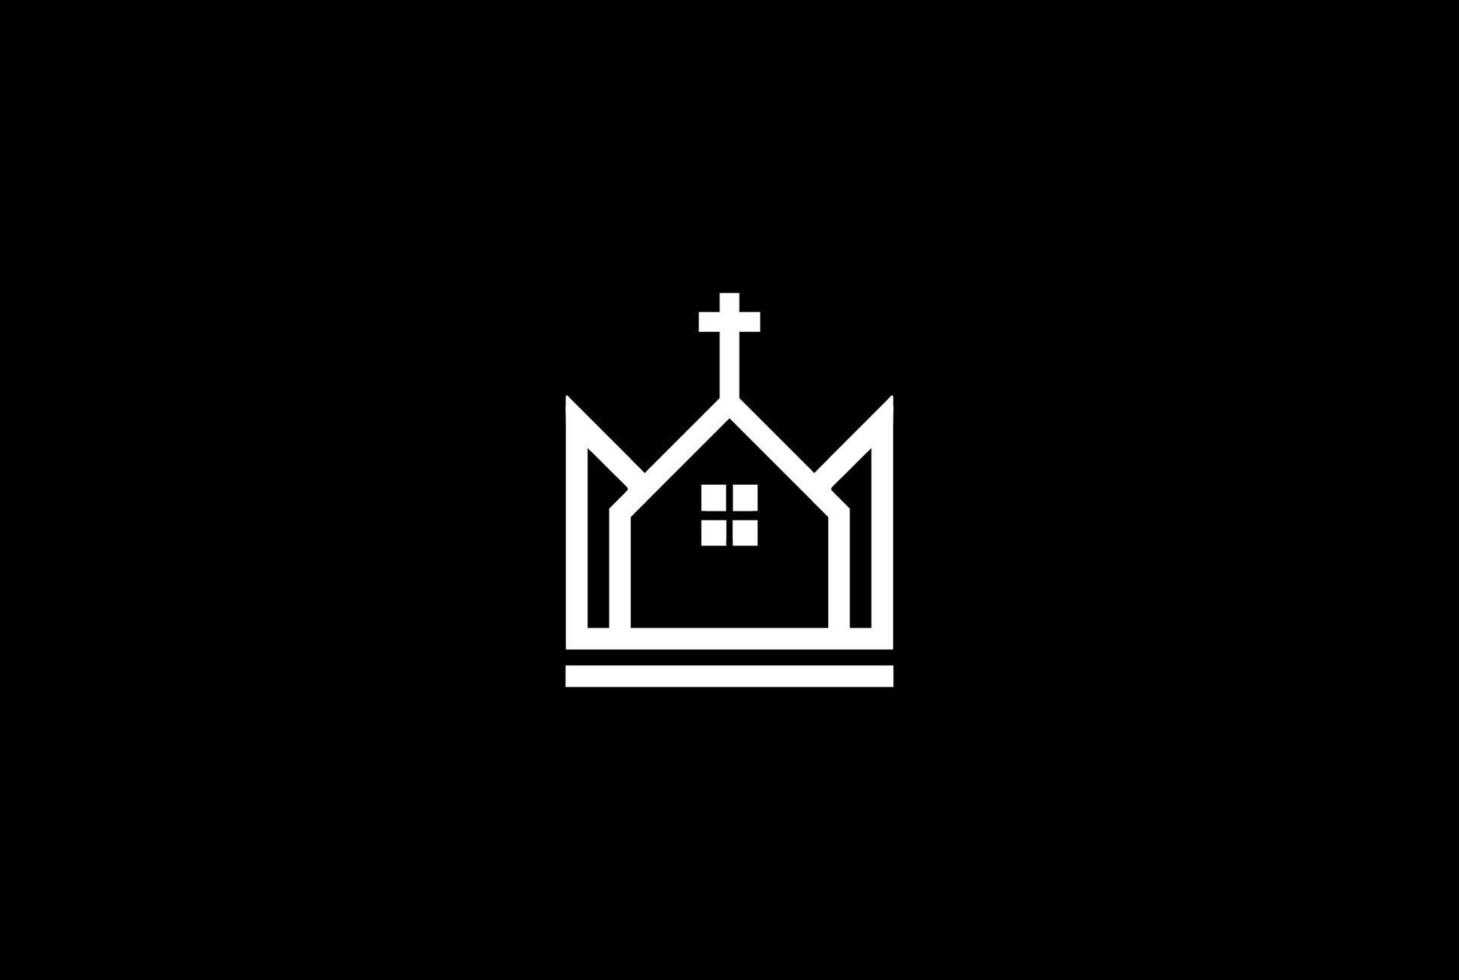 re regina corona cristiana chiesa cappella logo design vector